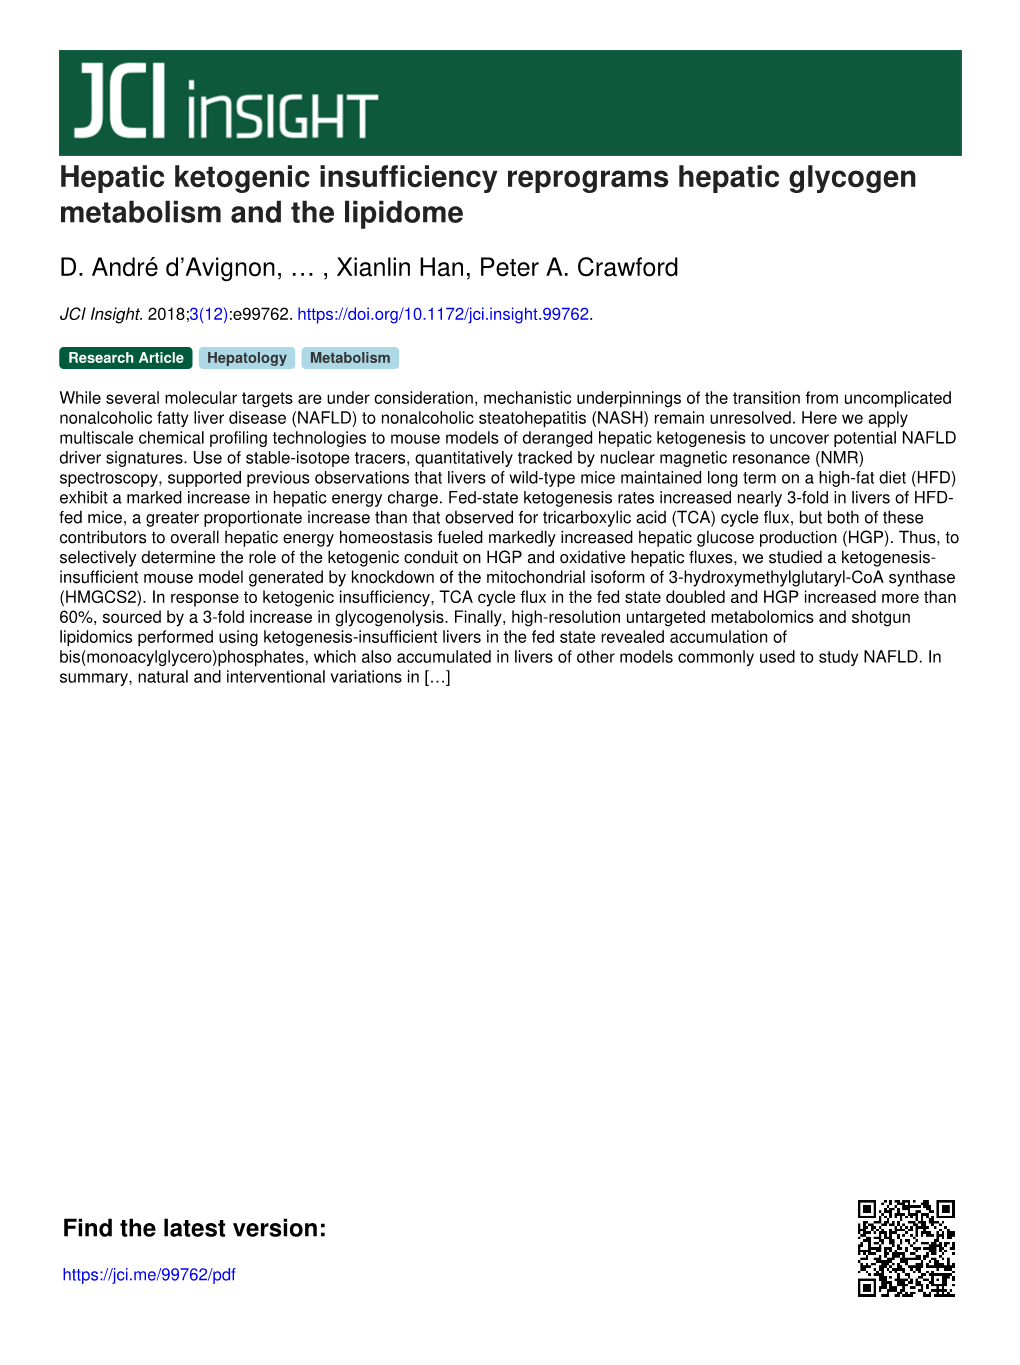 Hepatic Ketogenic Insufficiency Reprograms Hepatic Glycogen Metabolism and the Lipidome